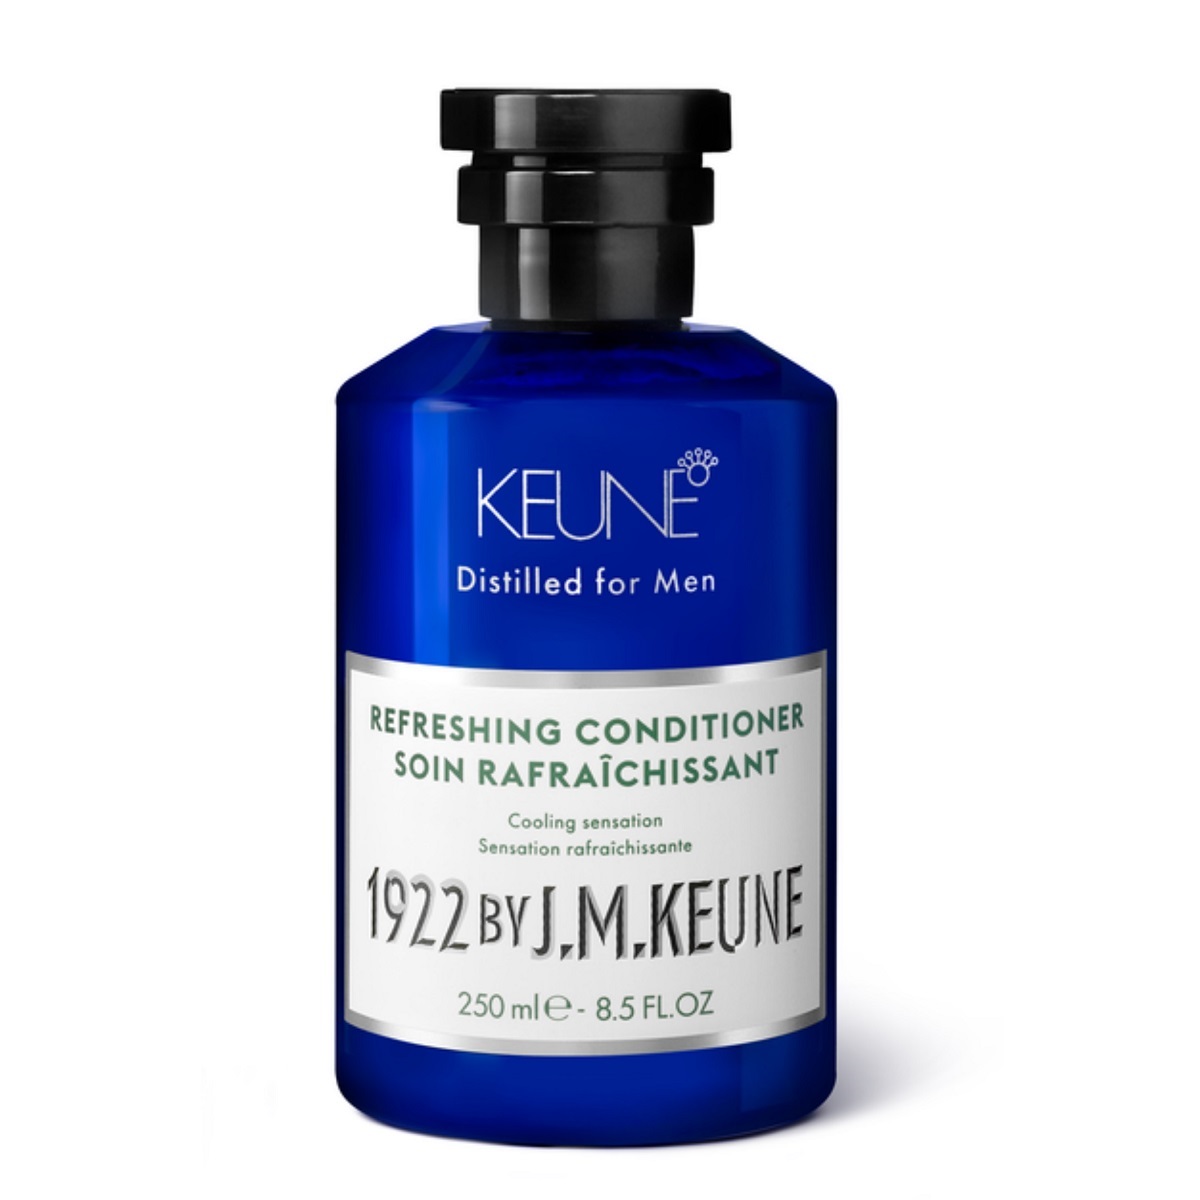 Keune Освежающий кондиционер Refreshing Conditioner, 250 мл (Keune, 1922 by J.M. Keune) цена и фото